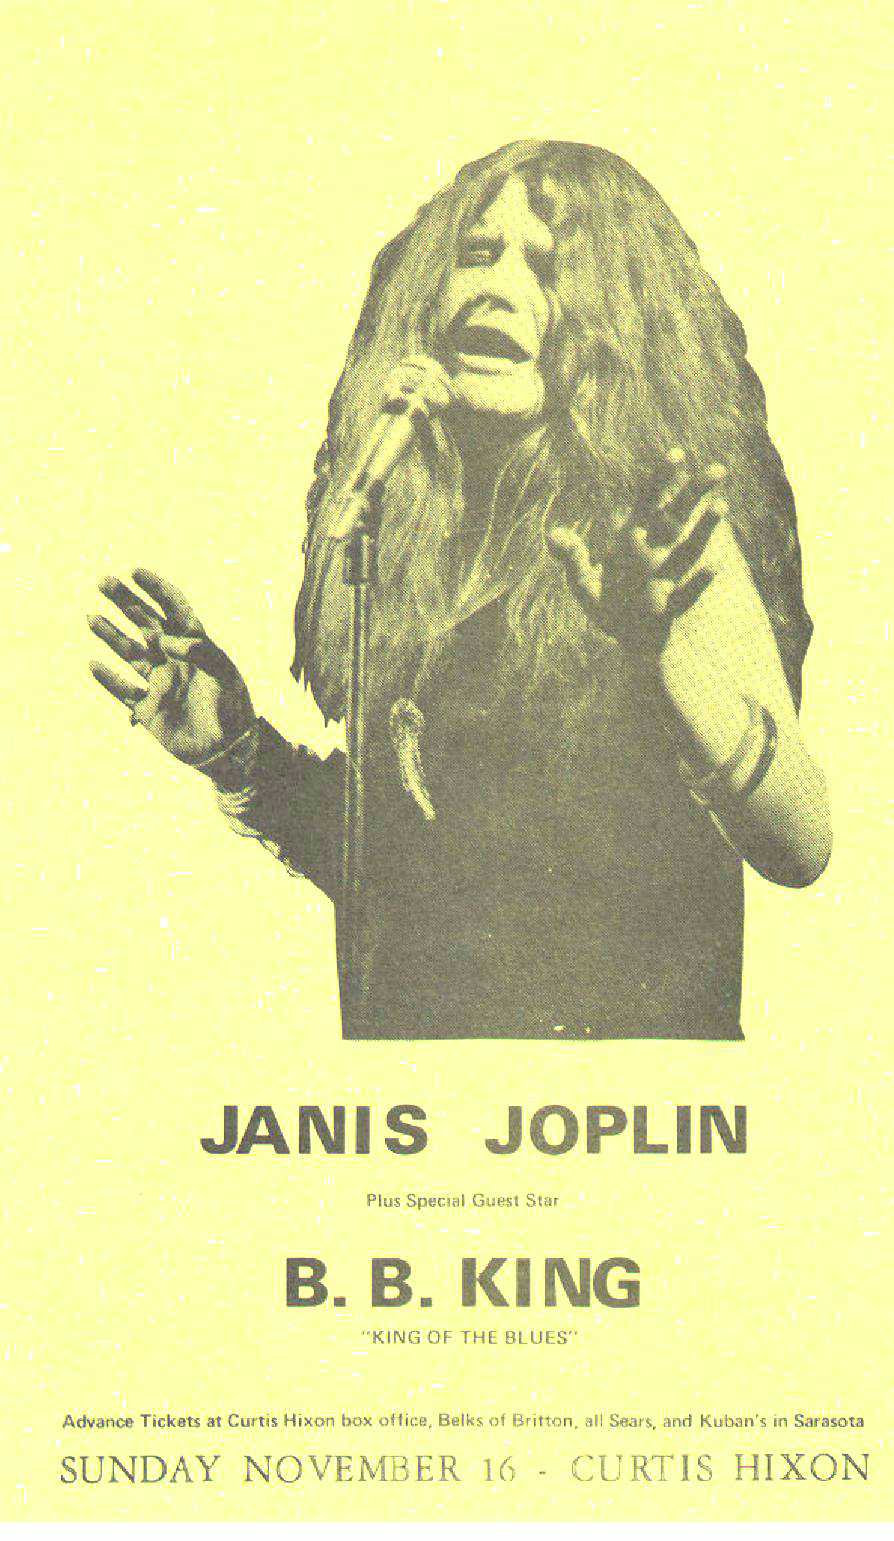 Janis Joplin photo